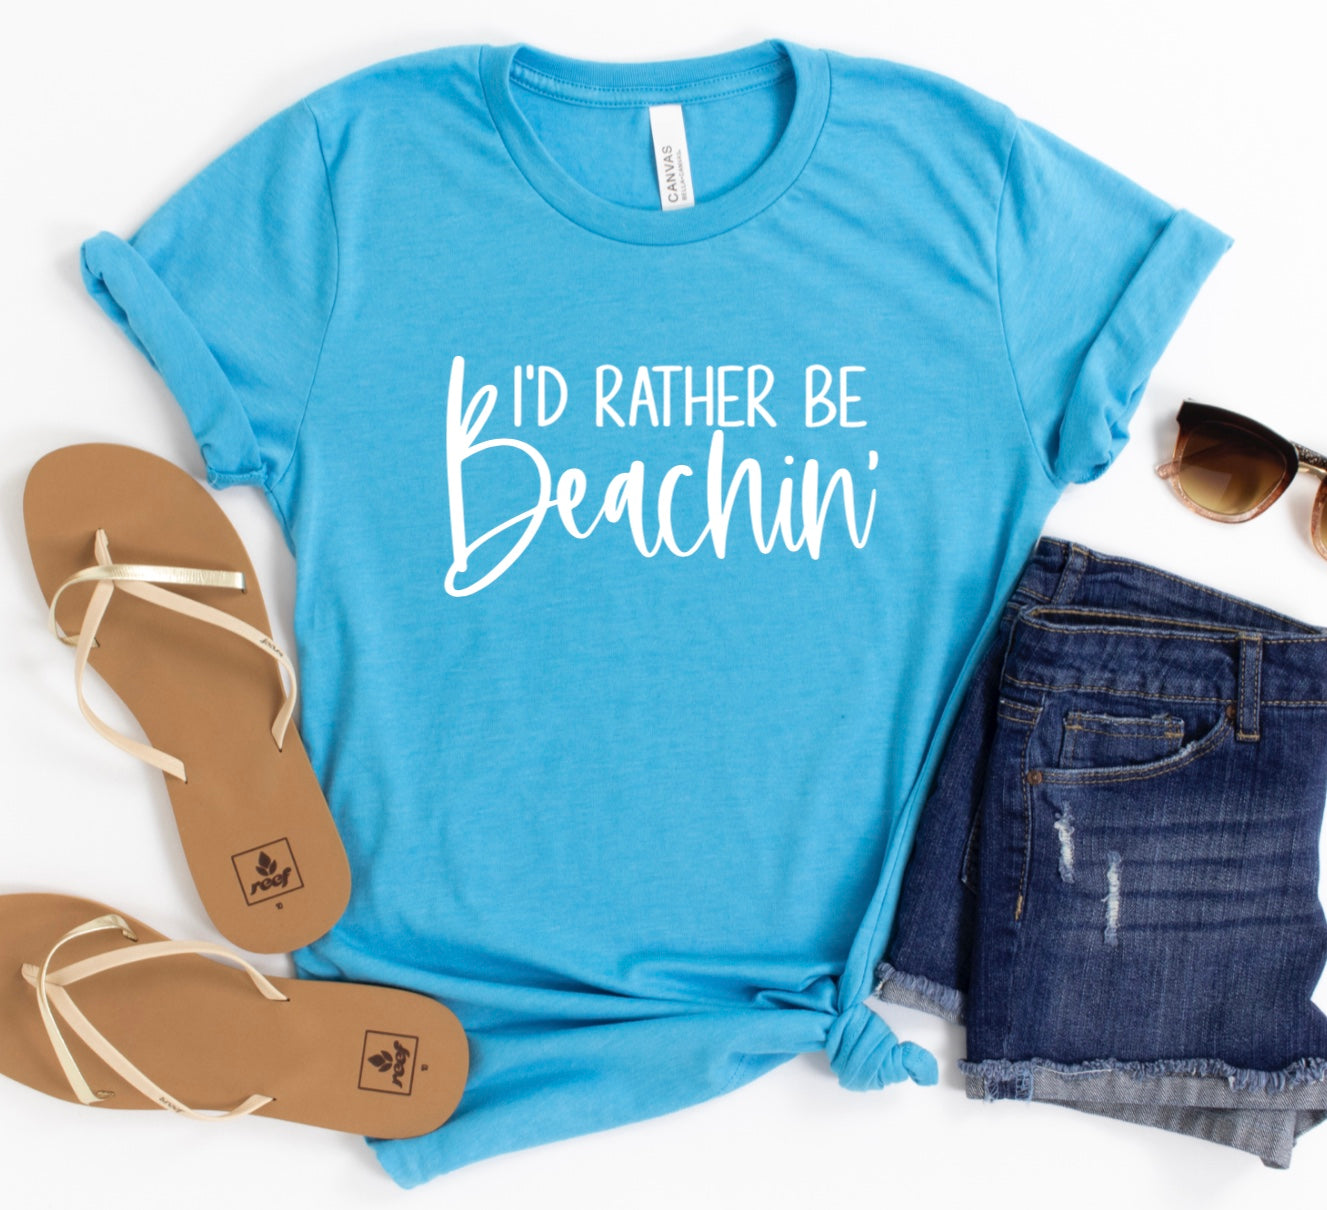 I’d rather be Beachin t-shirt 